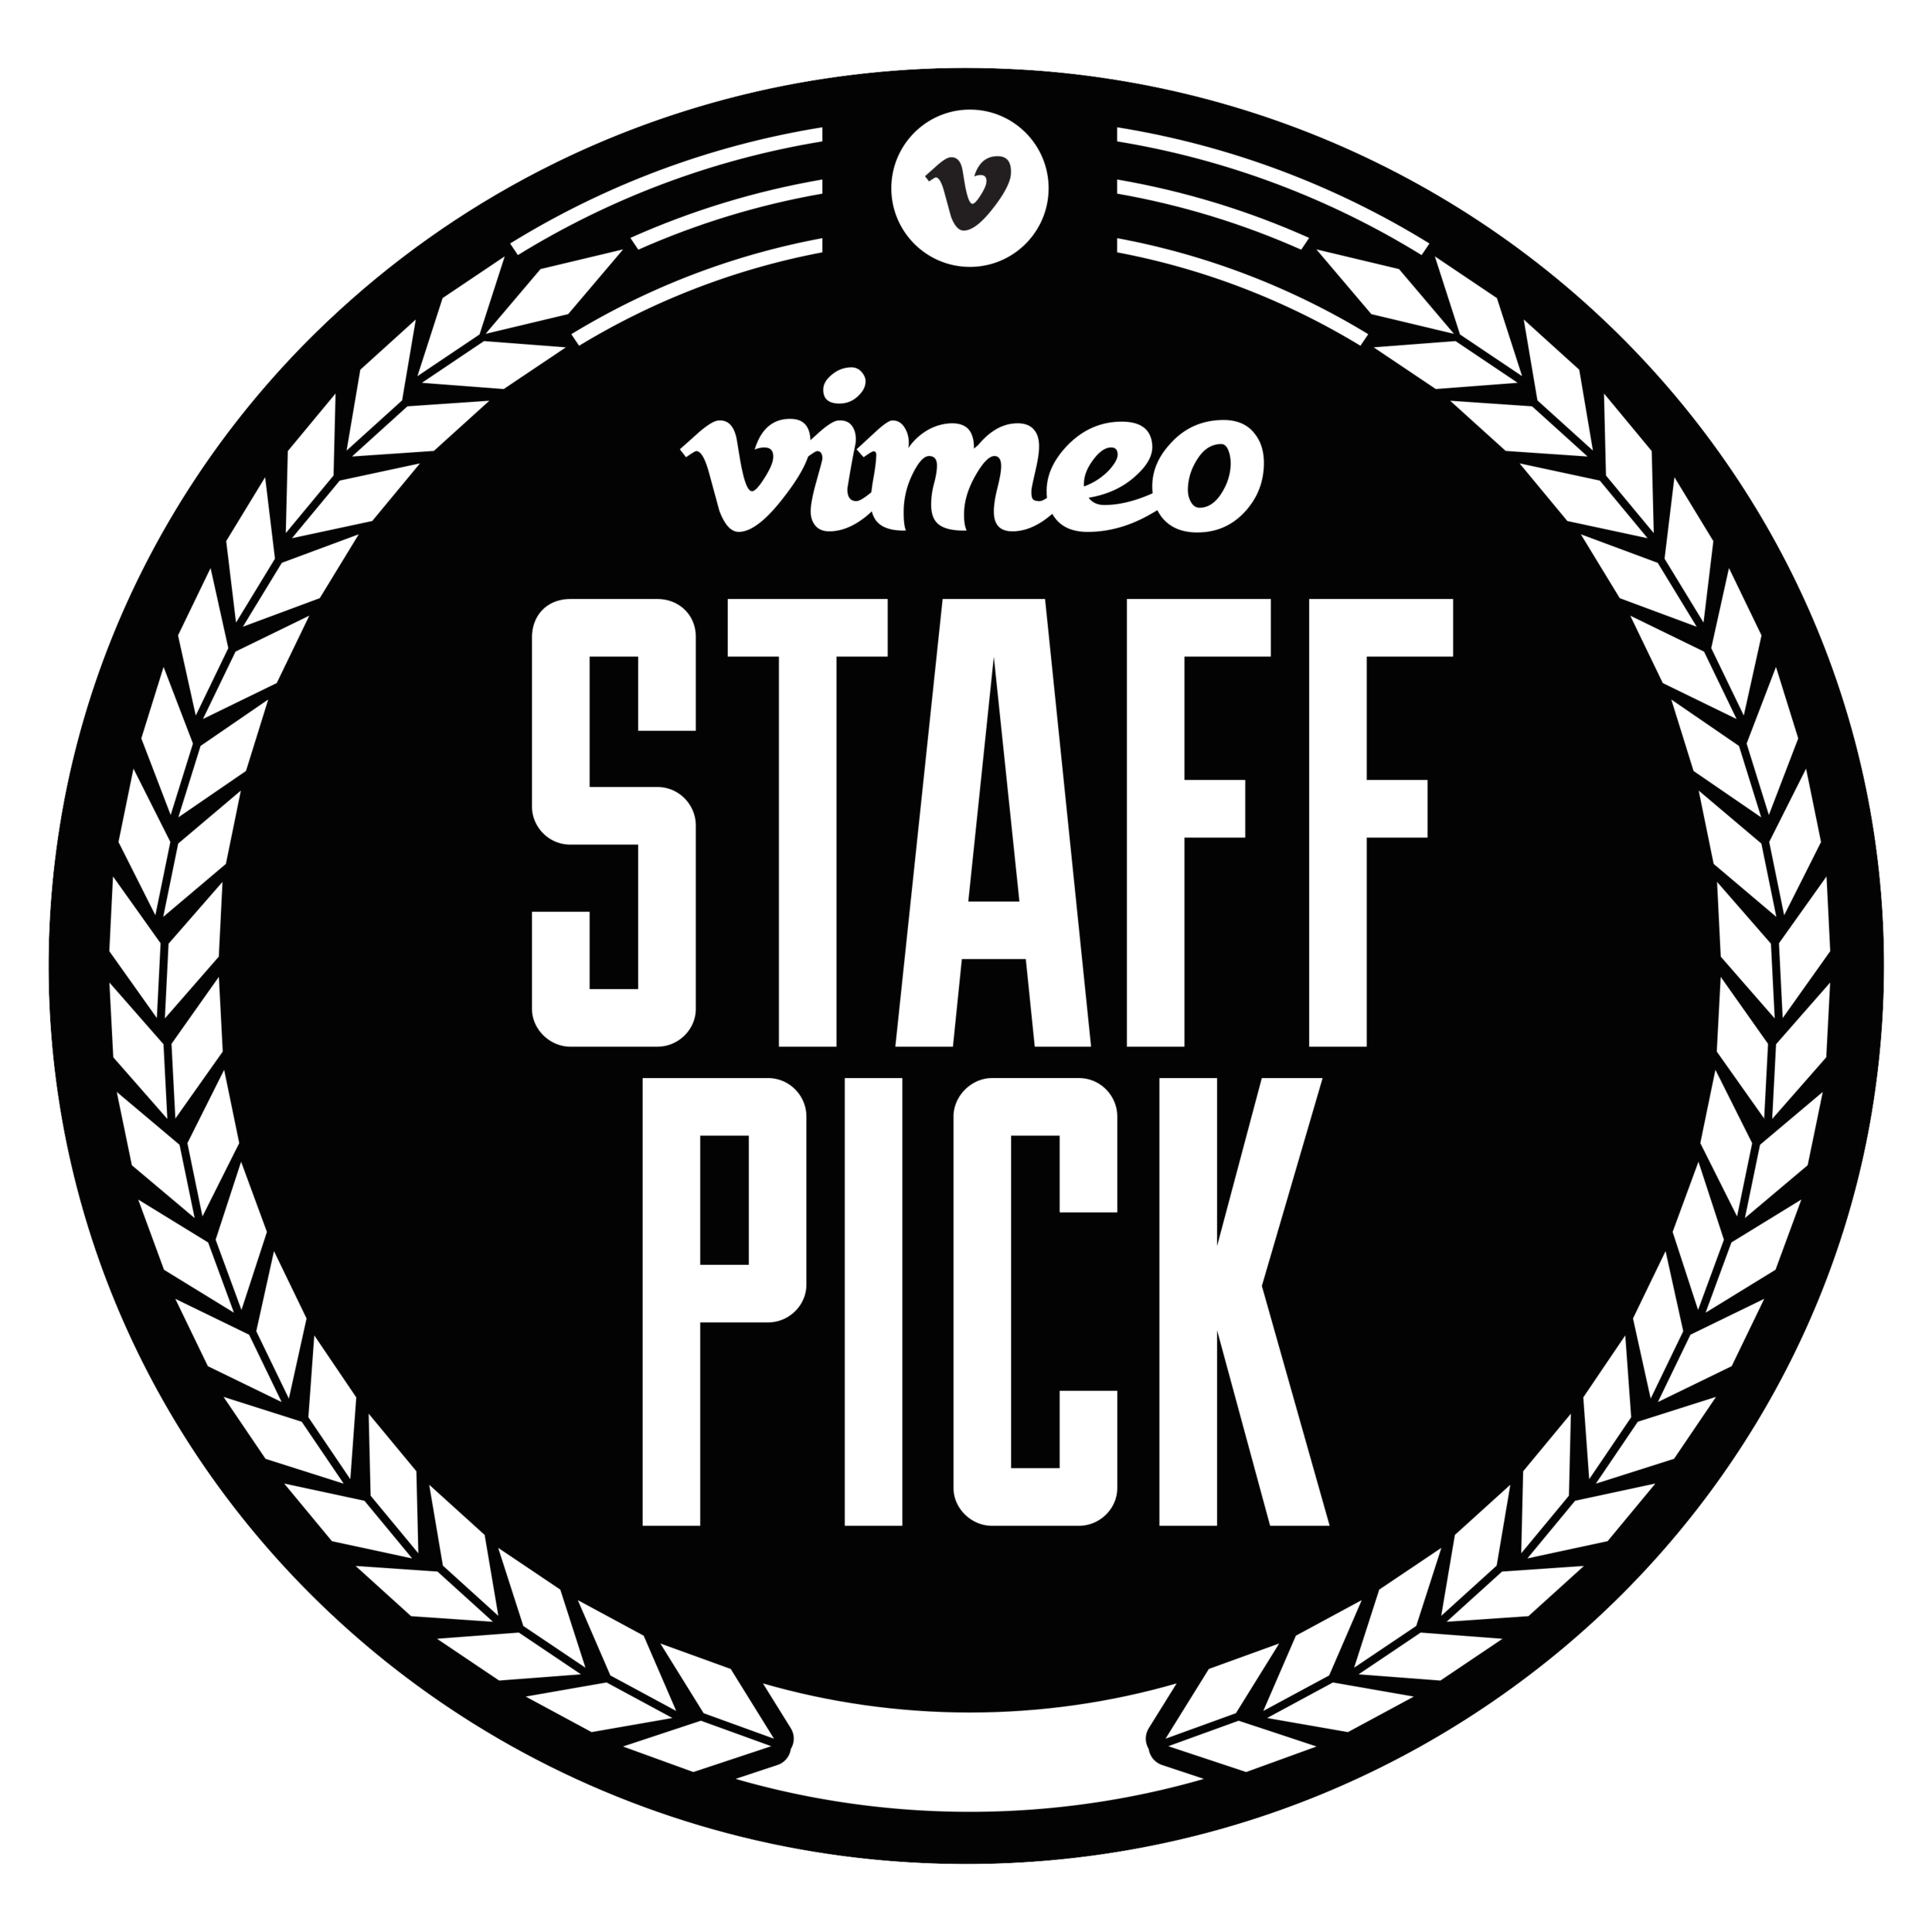 vimeo staff pick.png